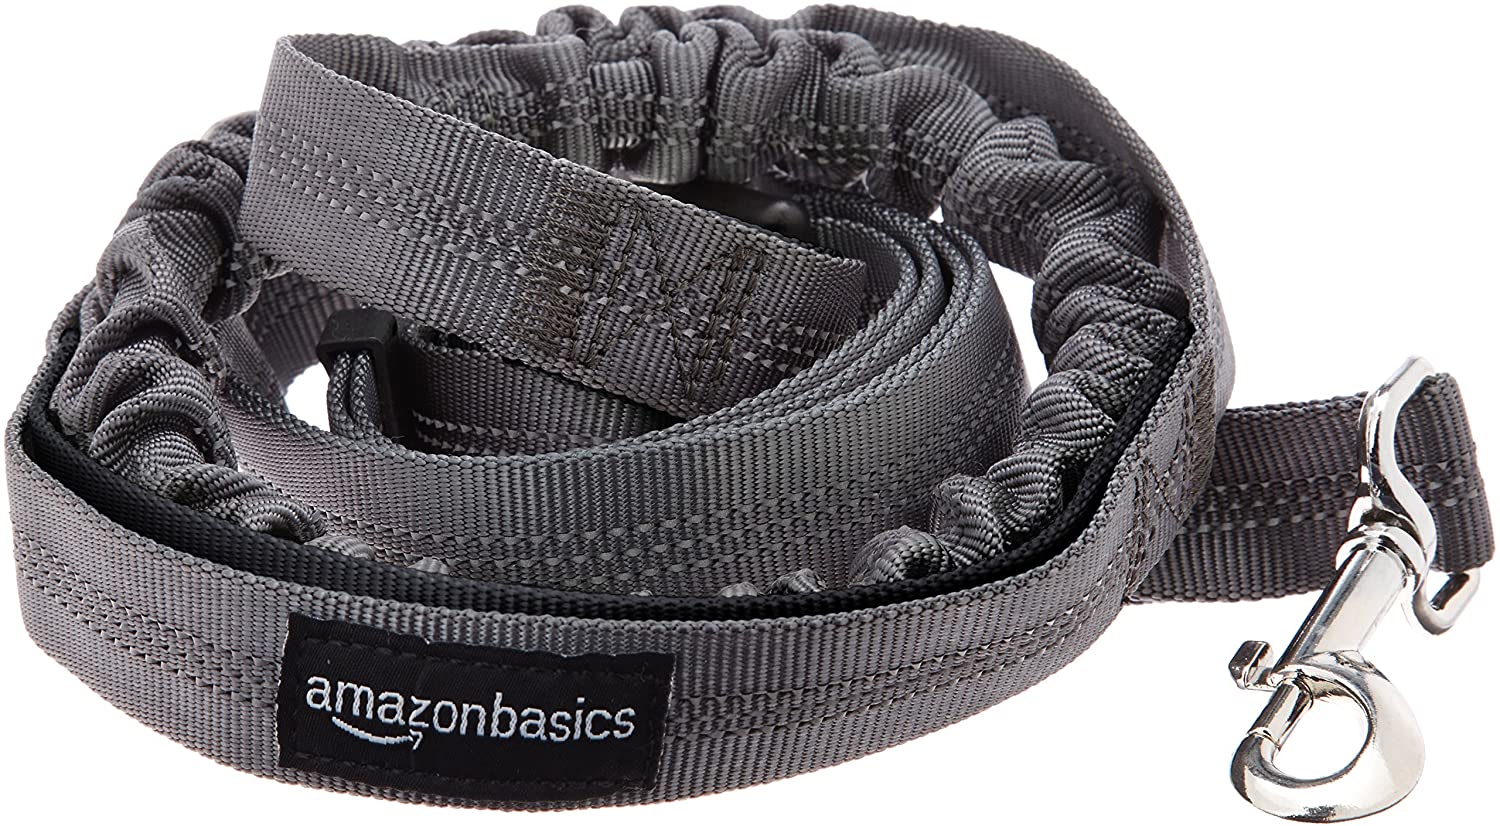  AmazonBasics - Correa para perro, elástica, asa doble, 1,21 m, color negro 